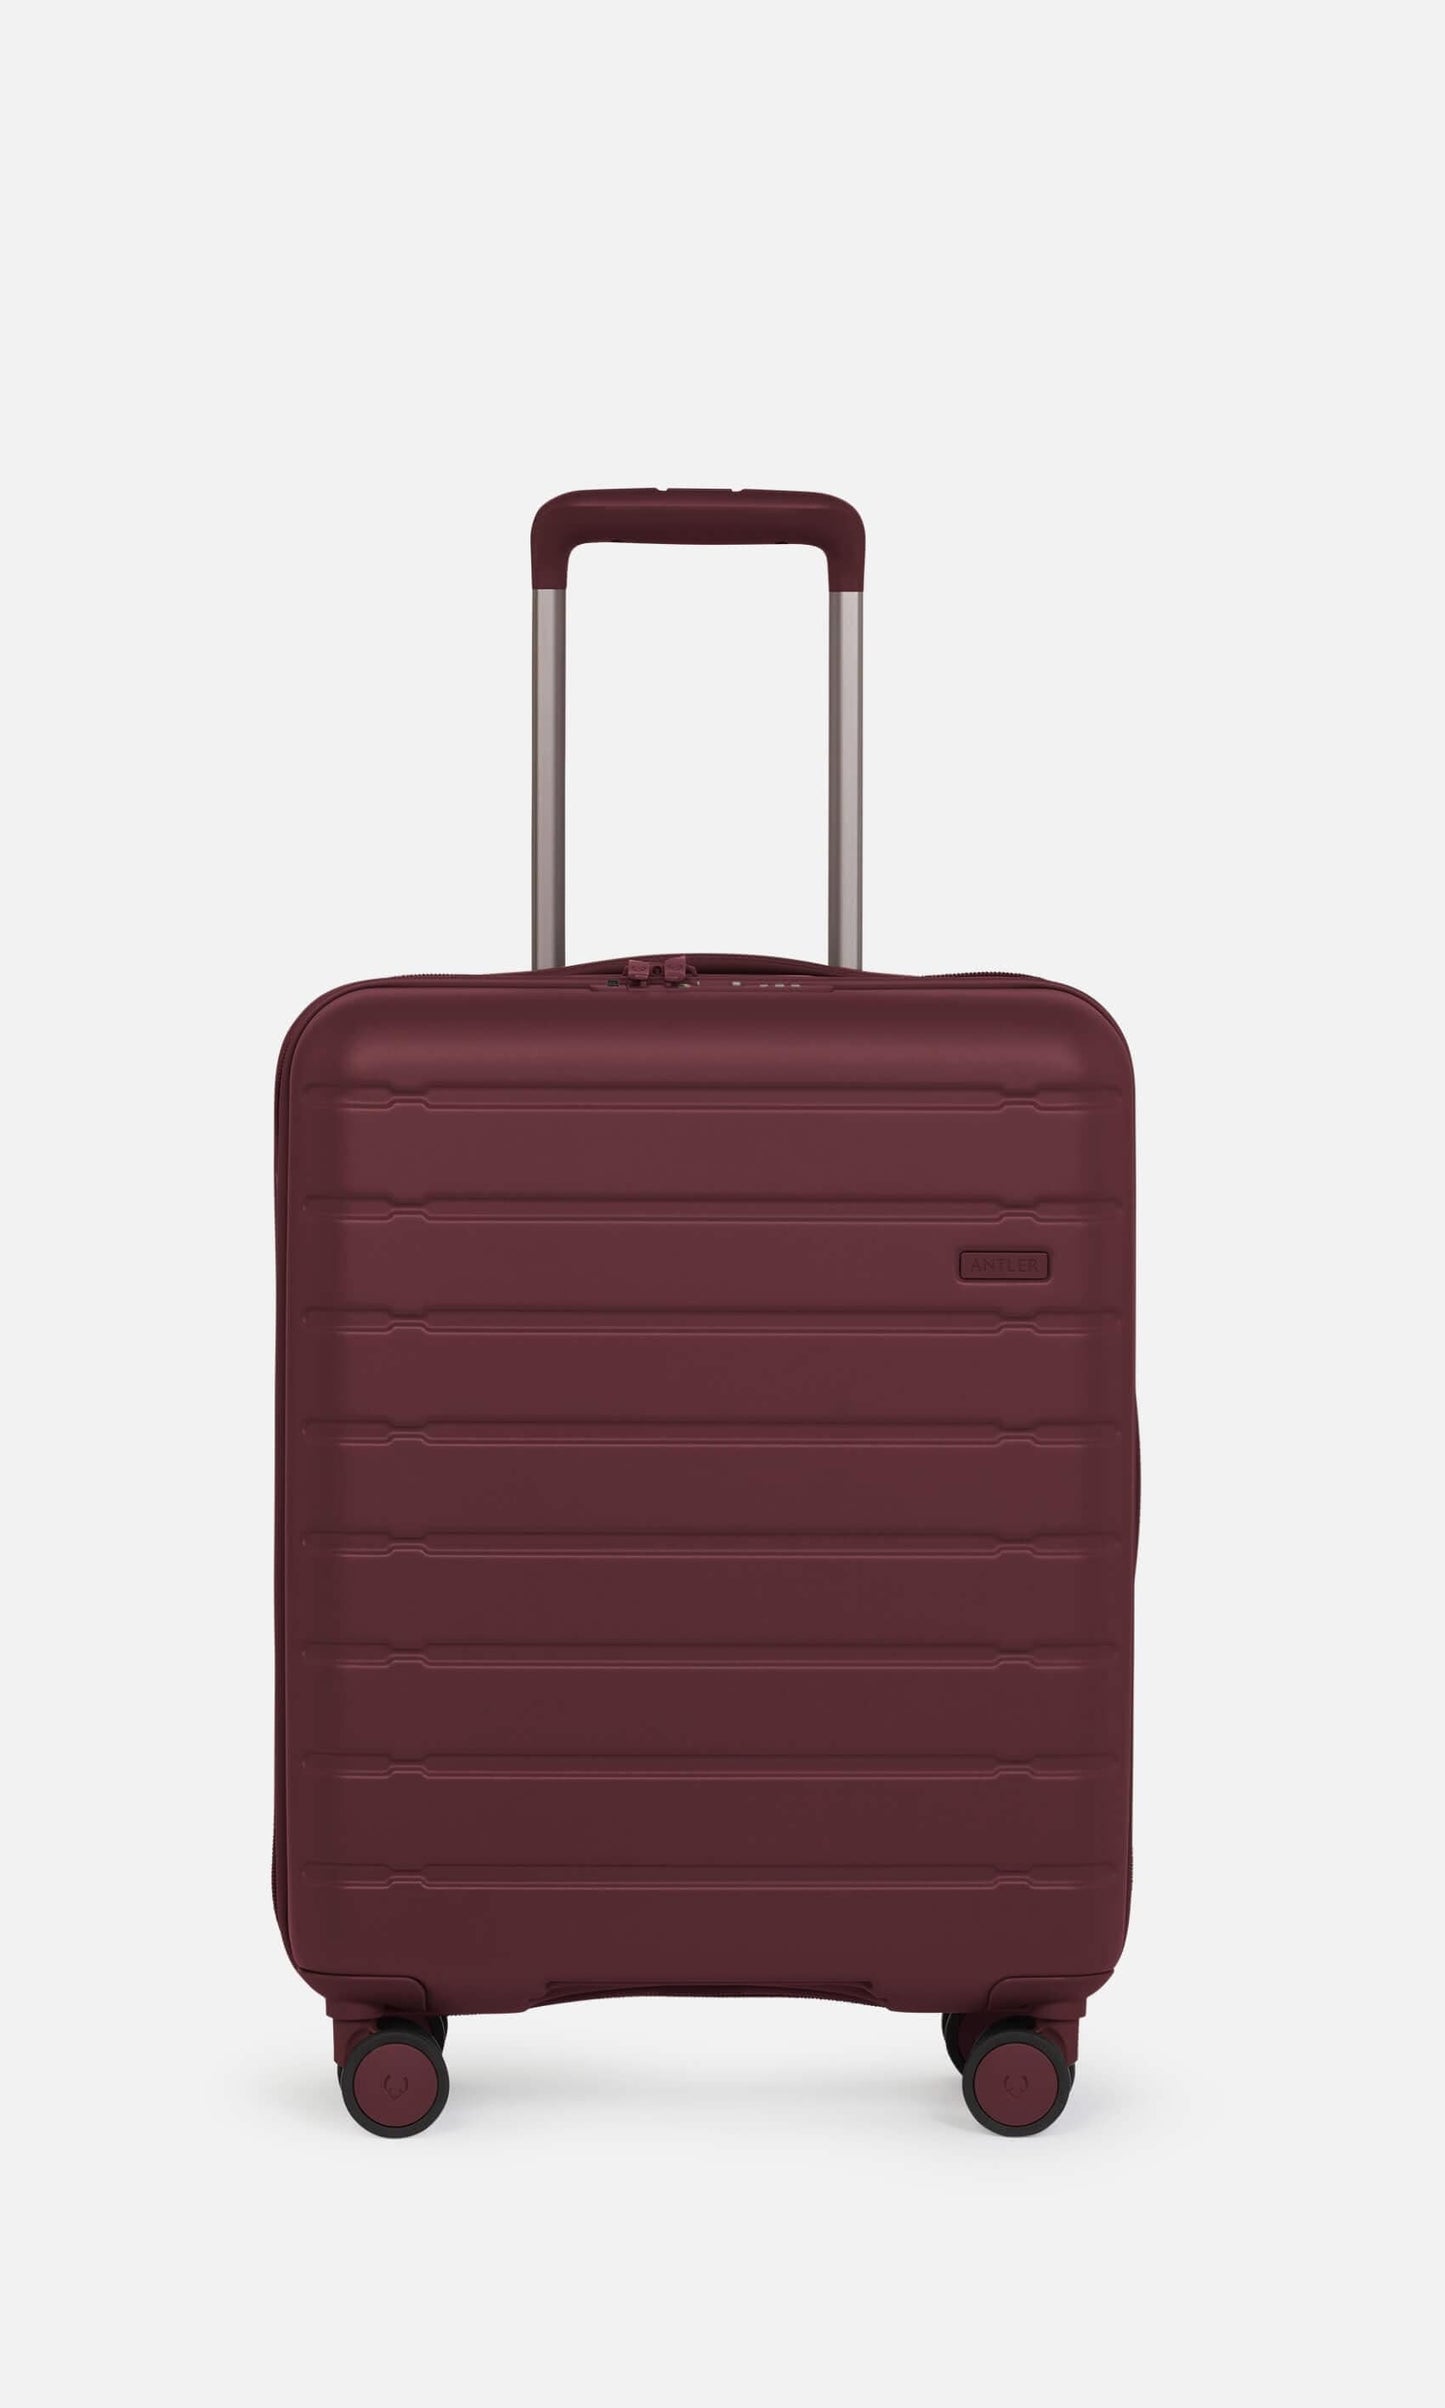 Antler Luggage -  Stamford set in berry purple - Hard Suitcases Stamford Set of 3 Suitcases Purple | Hard Luggage | Antler 